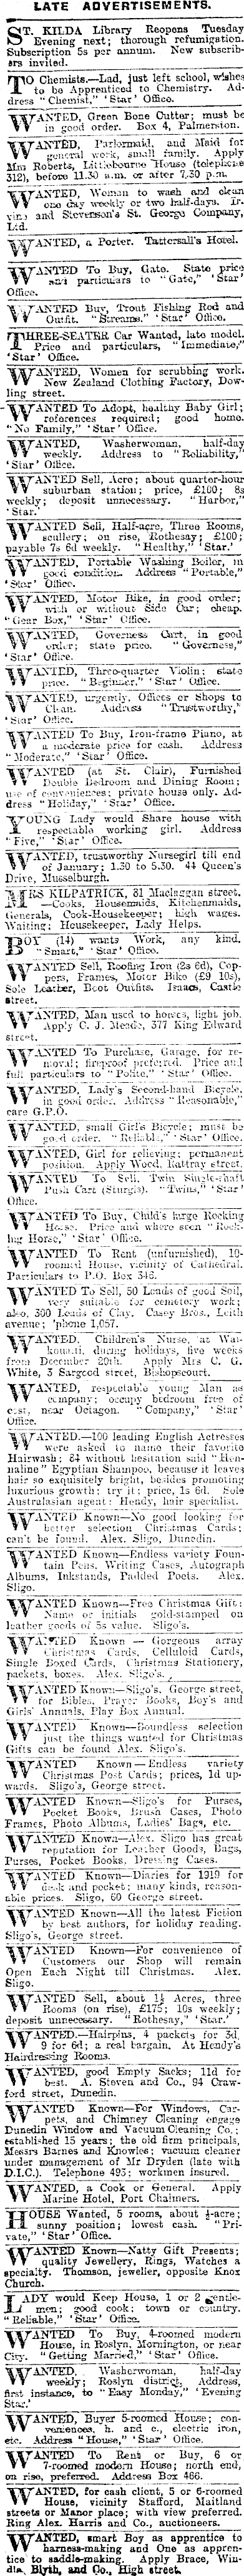 Elektrisch Uitputten Sluiting Papers Past | Newspapers | Evening Star | 14 December 1918 | Page 7  Advertisements Column 1